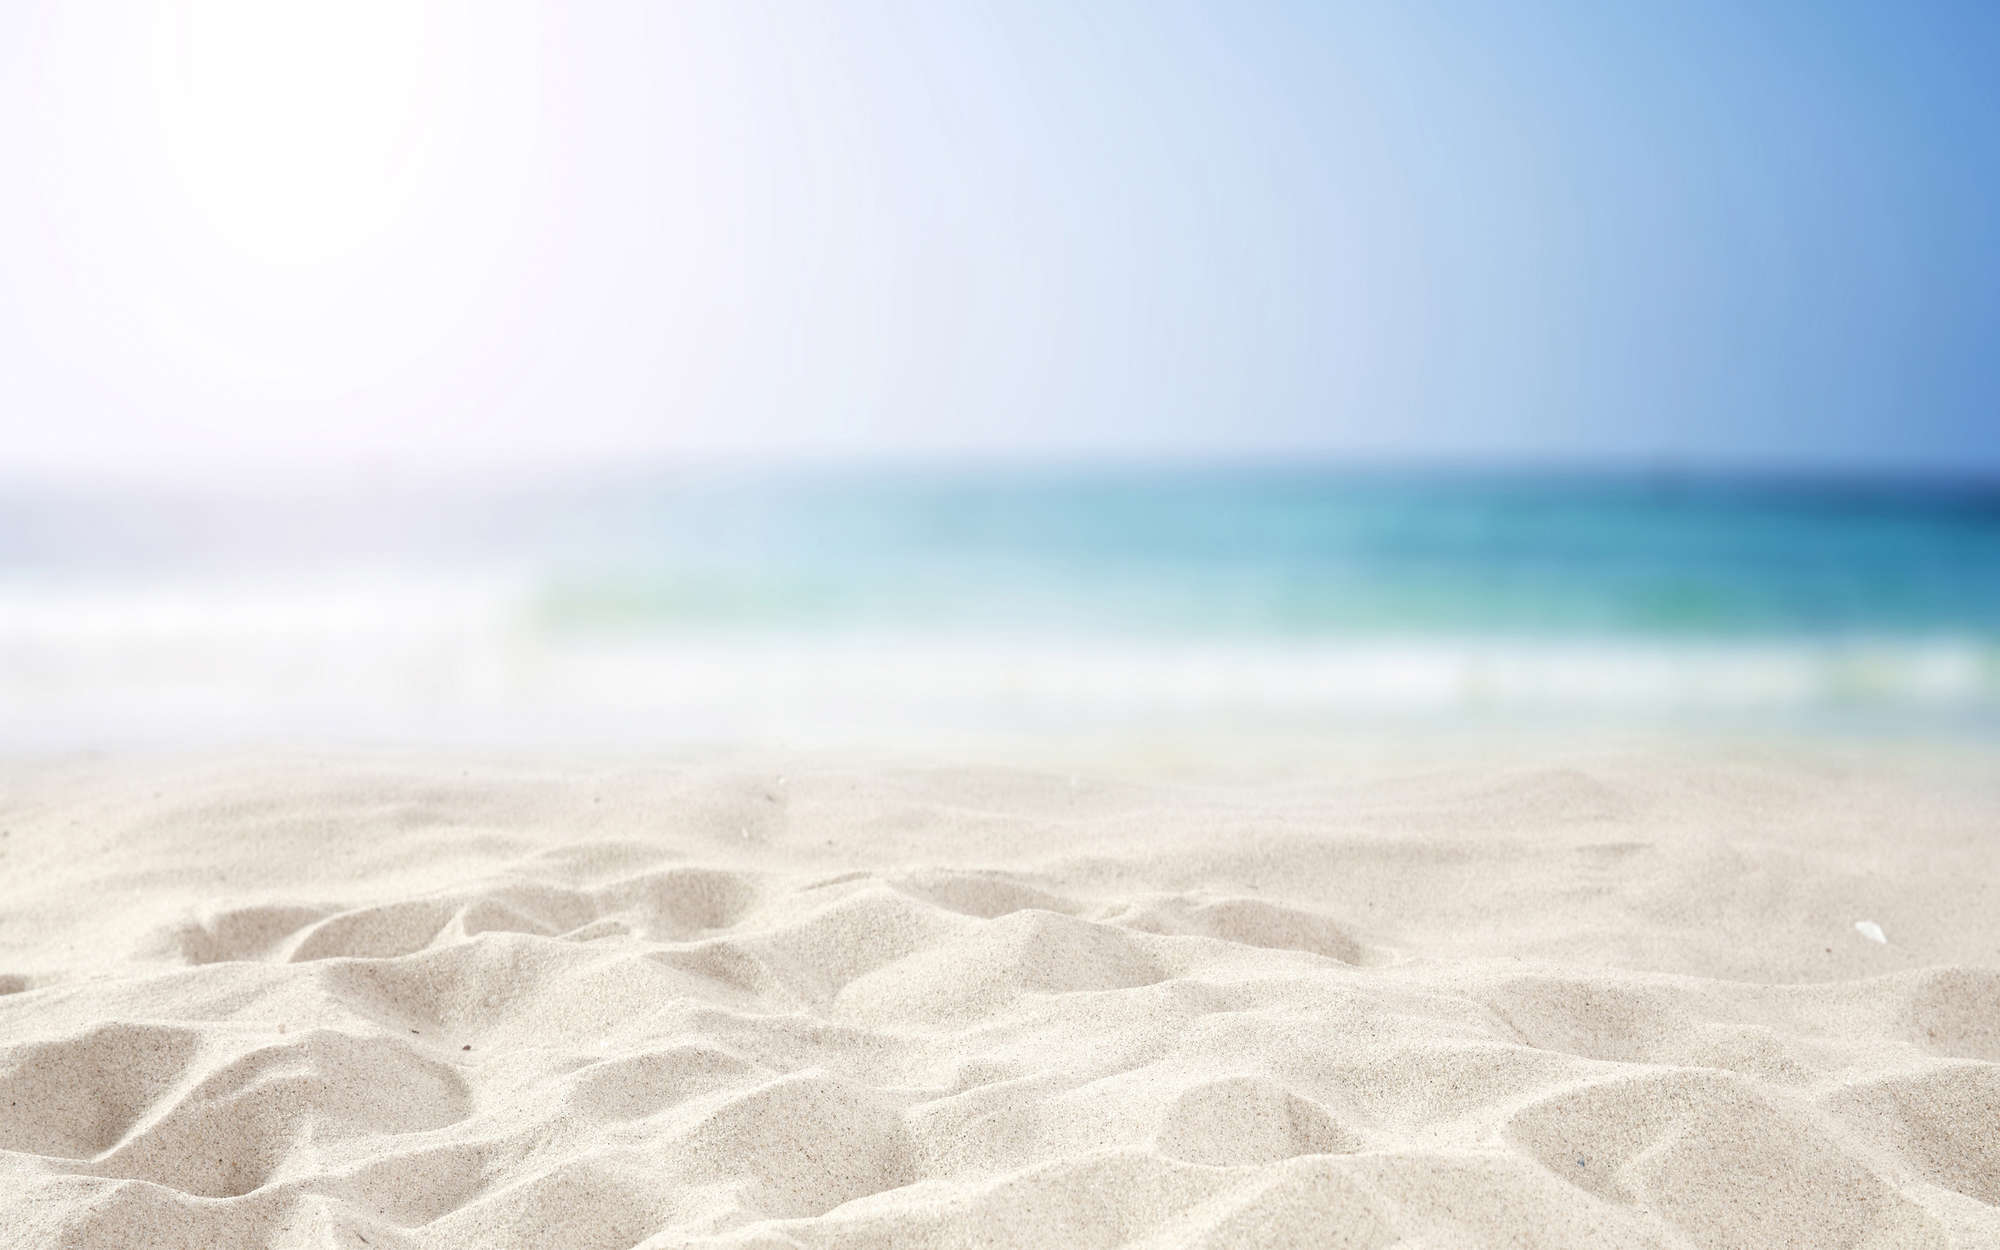             Fototapete Strand mit Sand in Weiß – Perlmutt Glattvlies
        